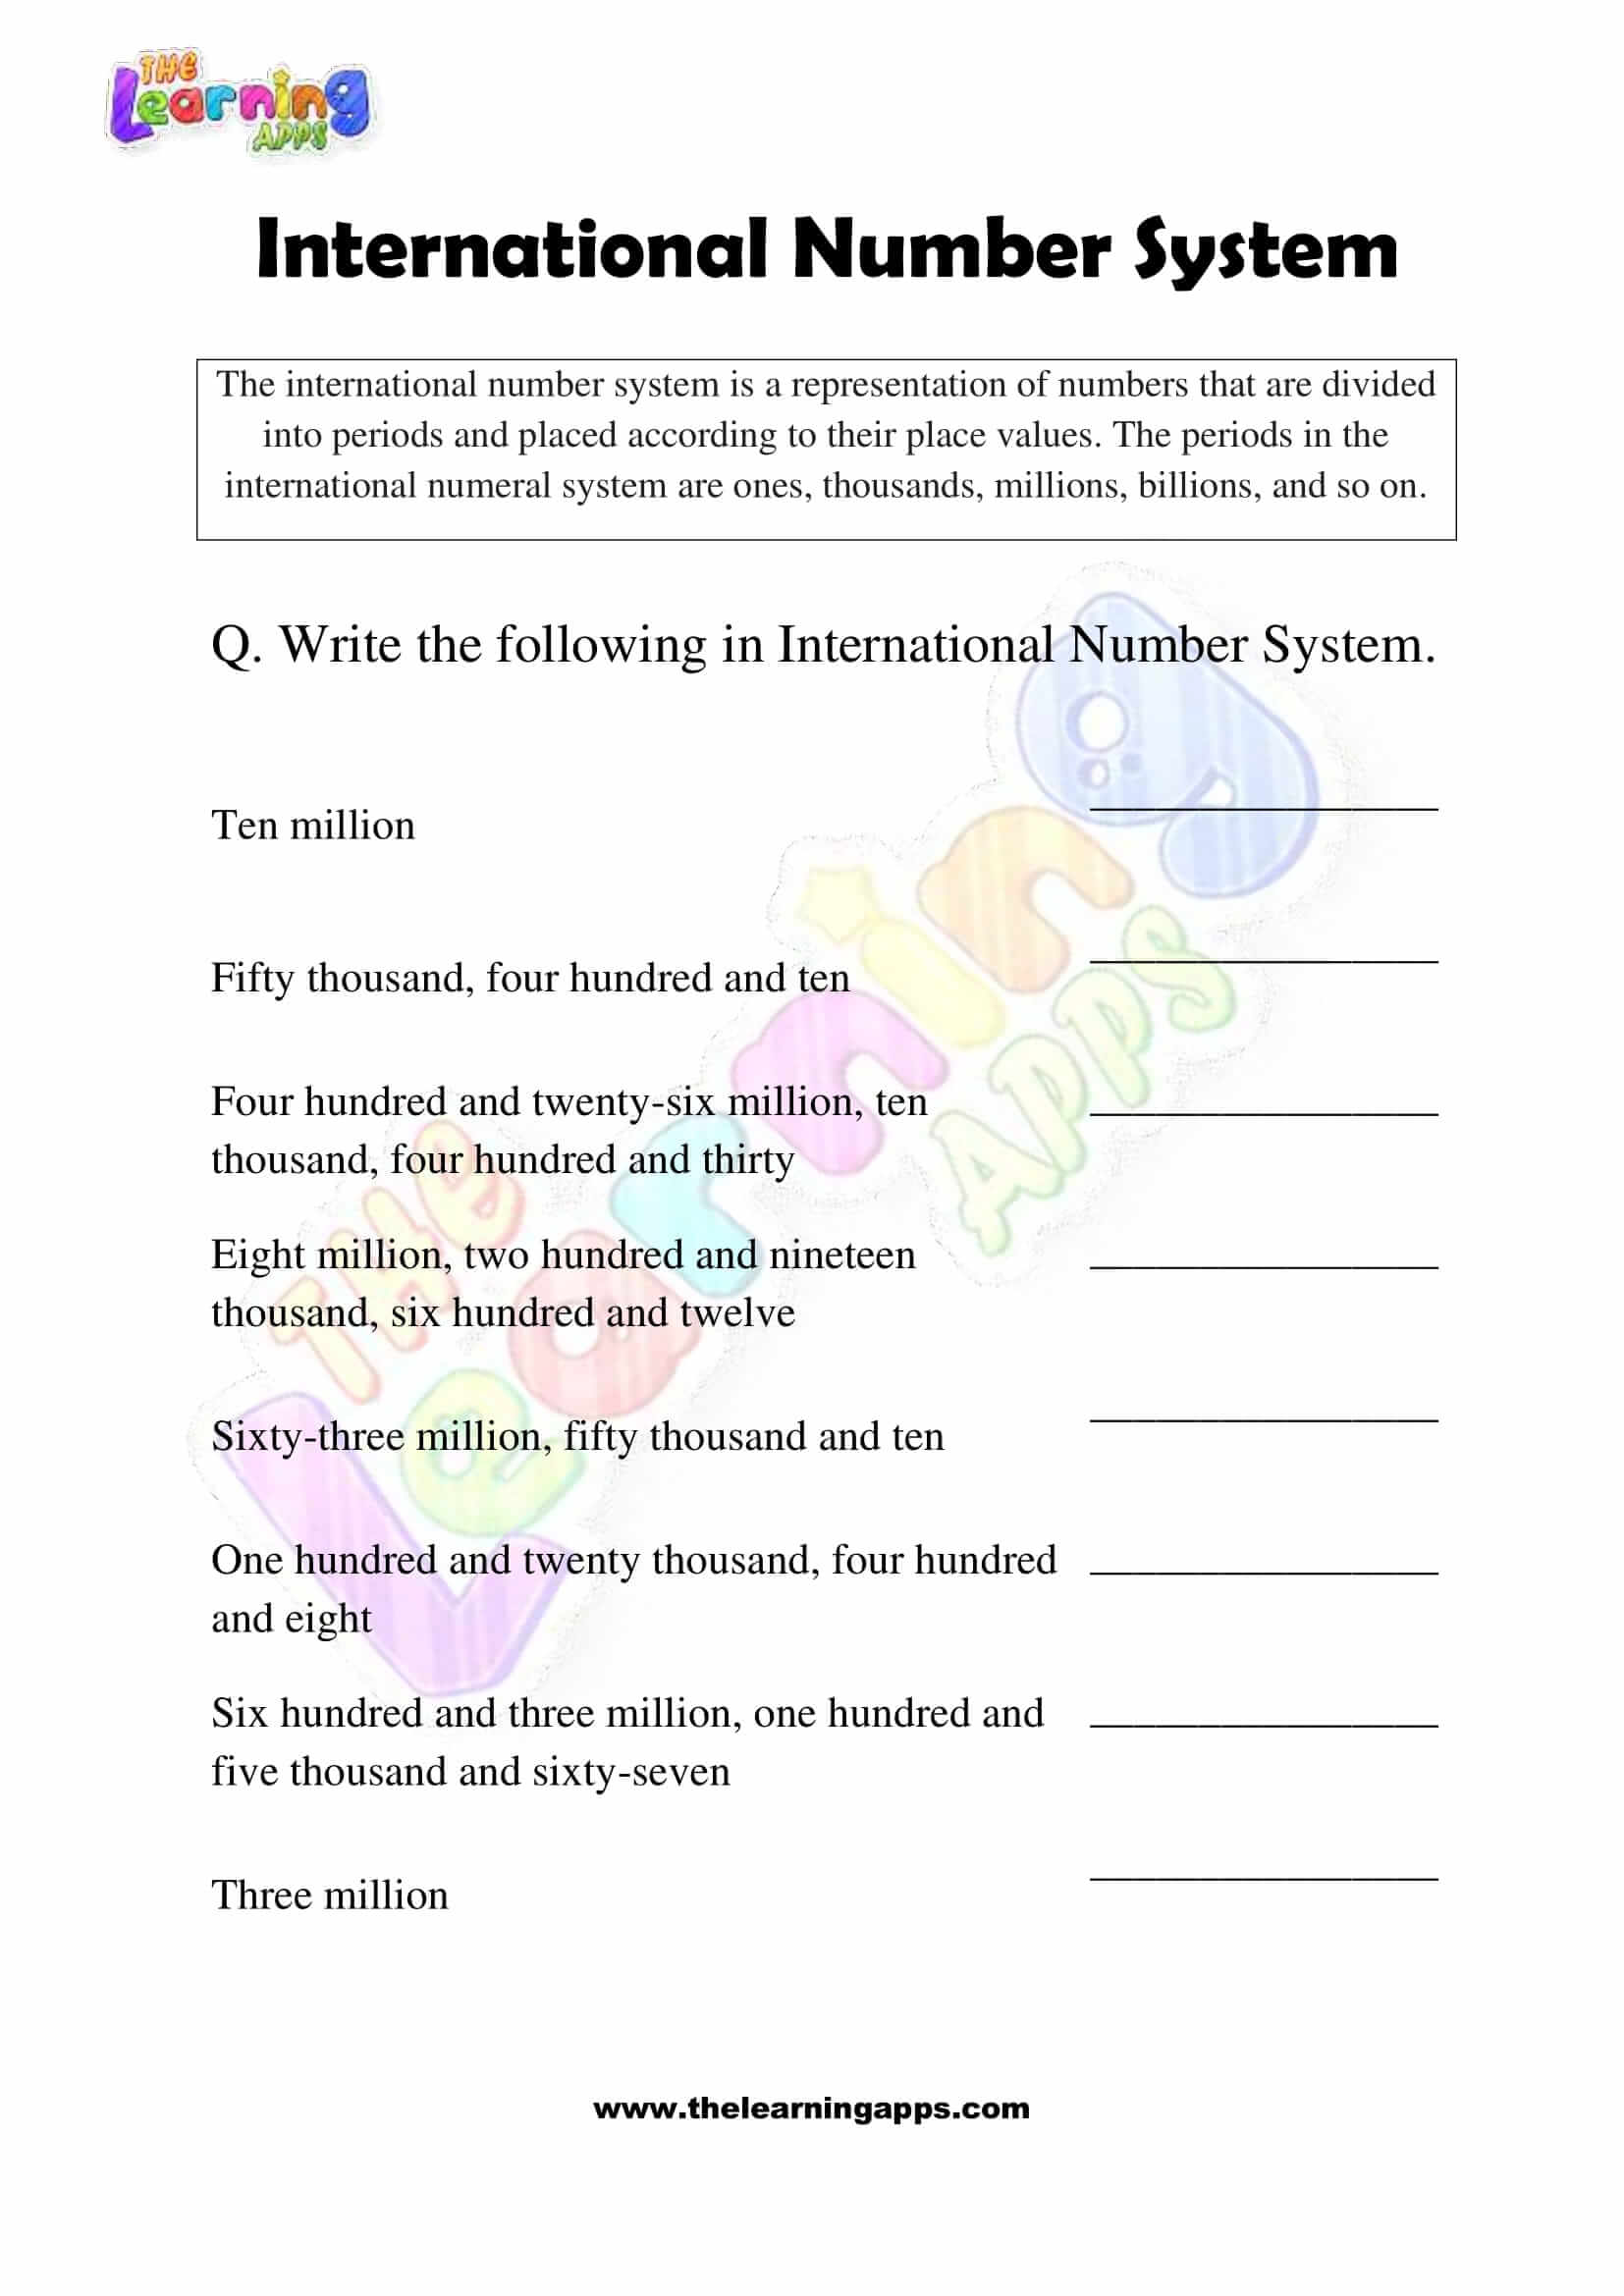 International Number System - Grade 3 - Activity 5